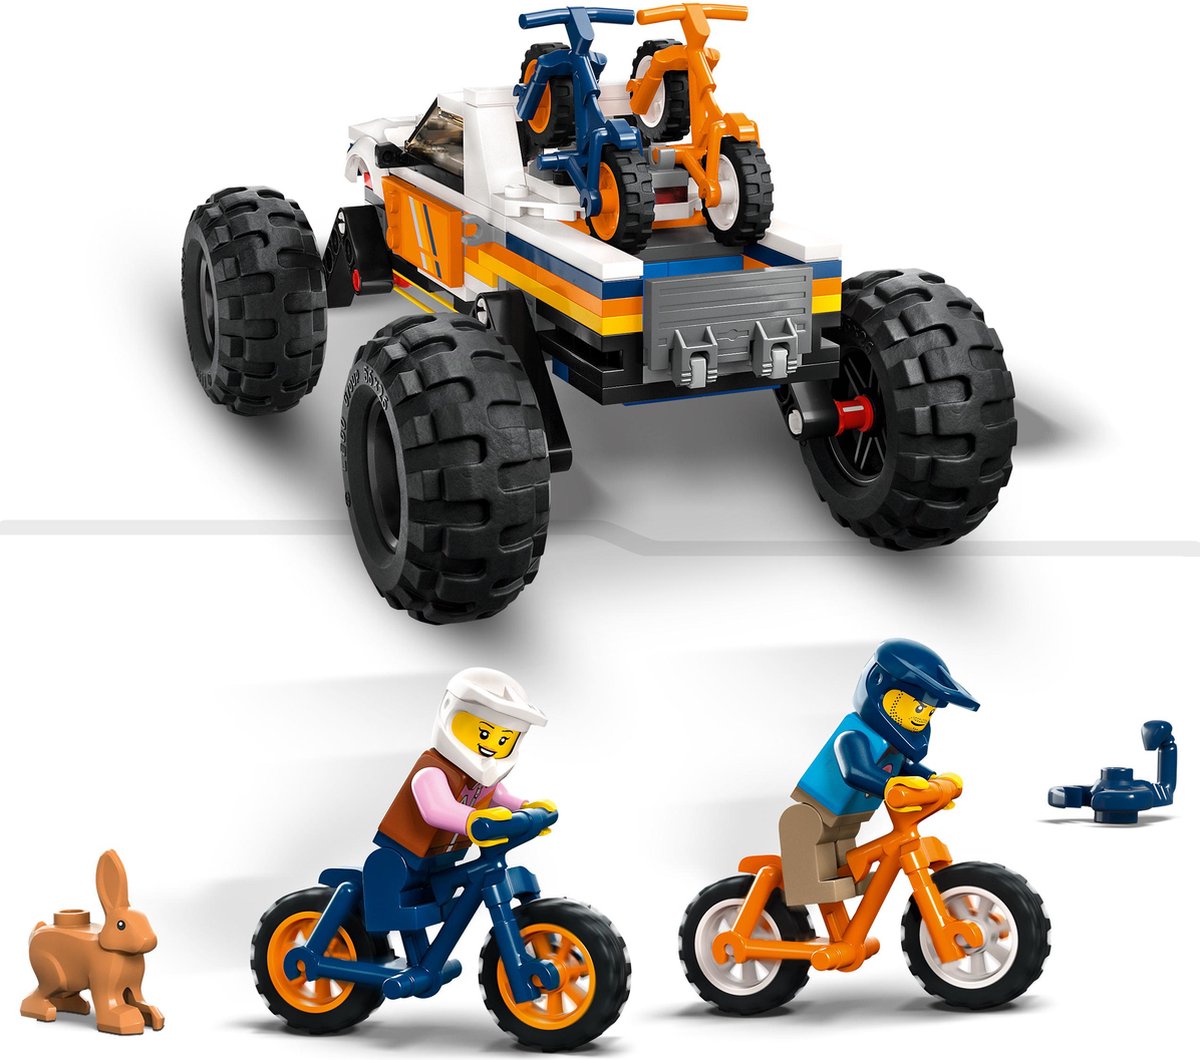 LEGO City 4x4 Terreinwagen avonturen - 60387